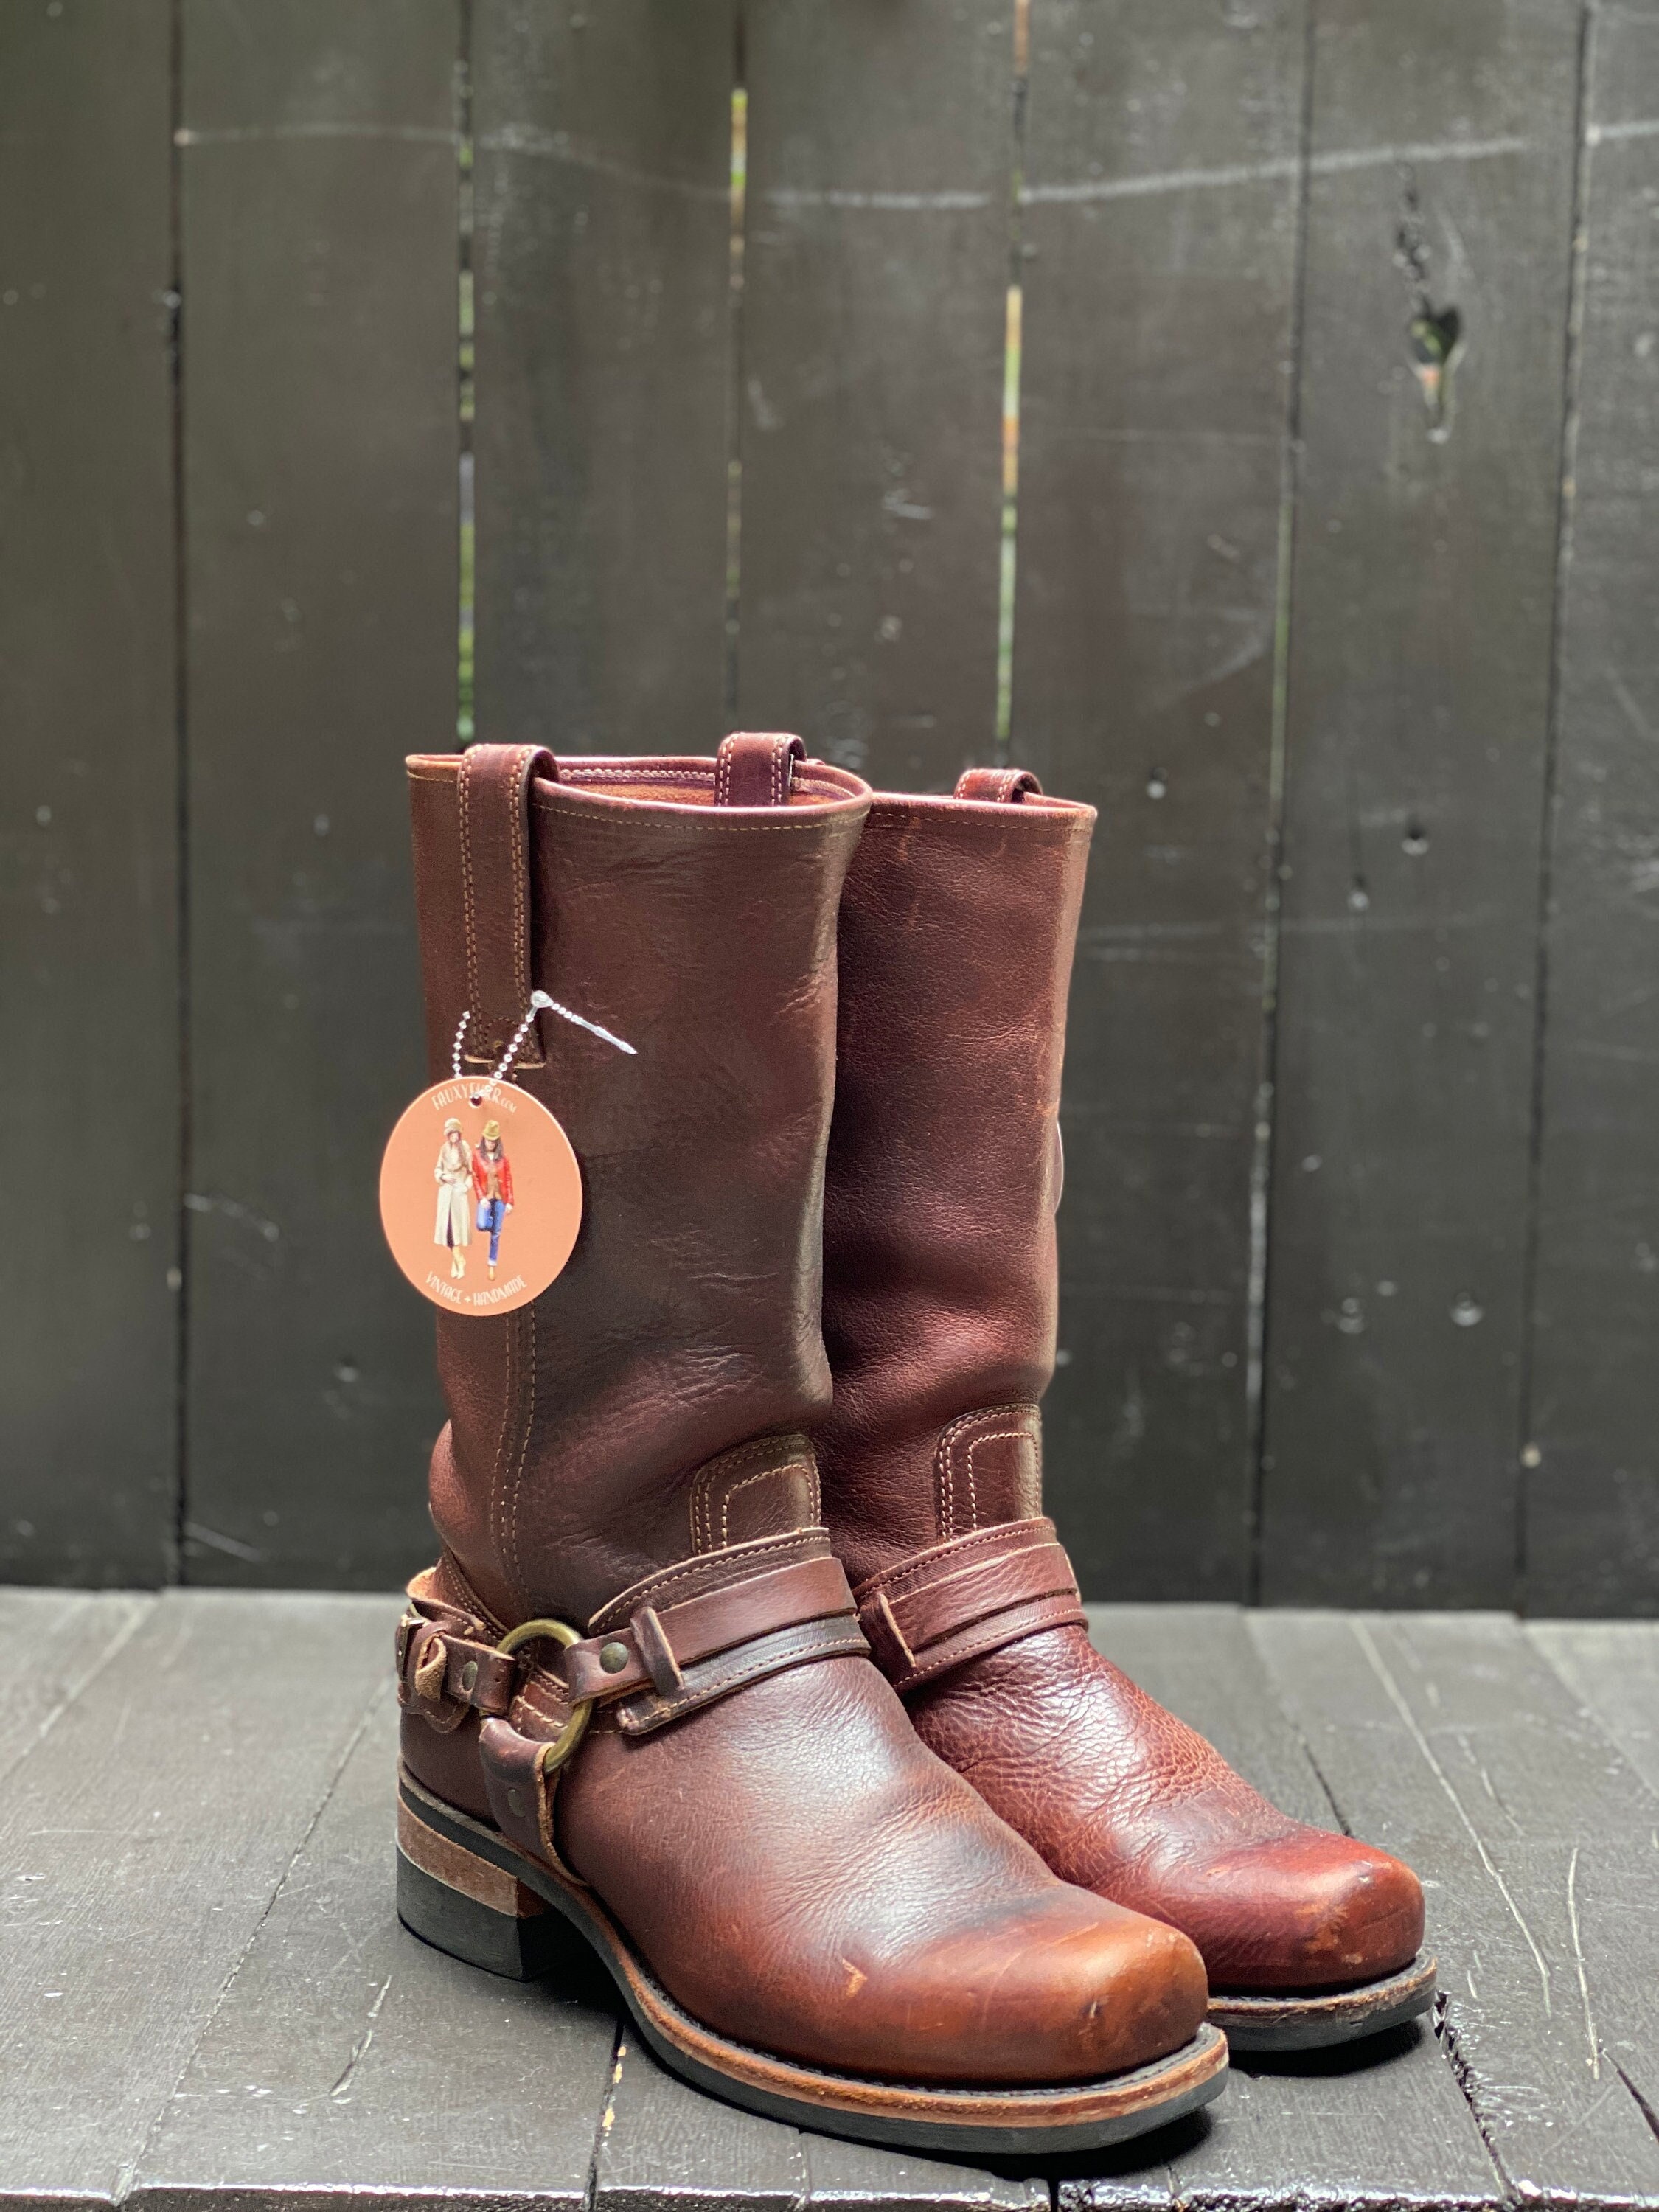 vintage 1970s burgundy FRYE boots Mens 9 D leather Harness Campus black  label